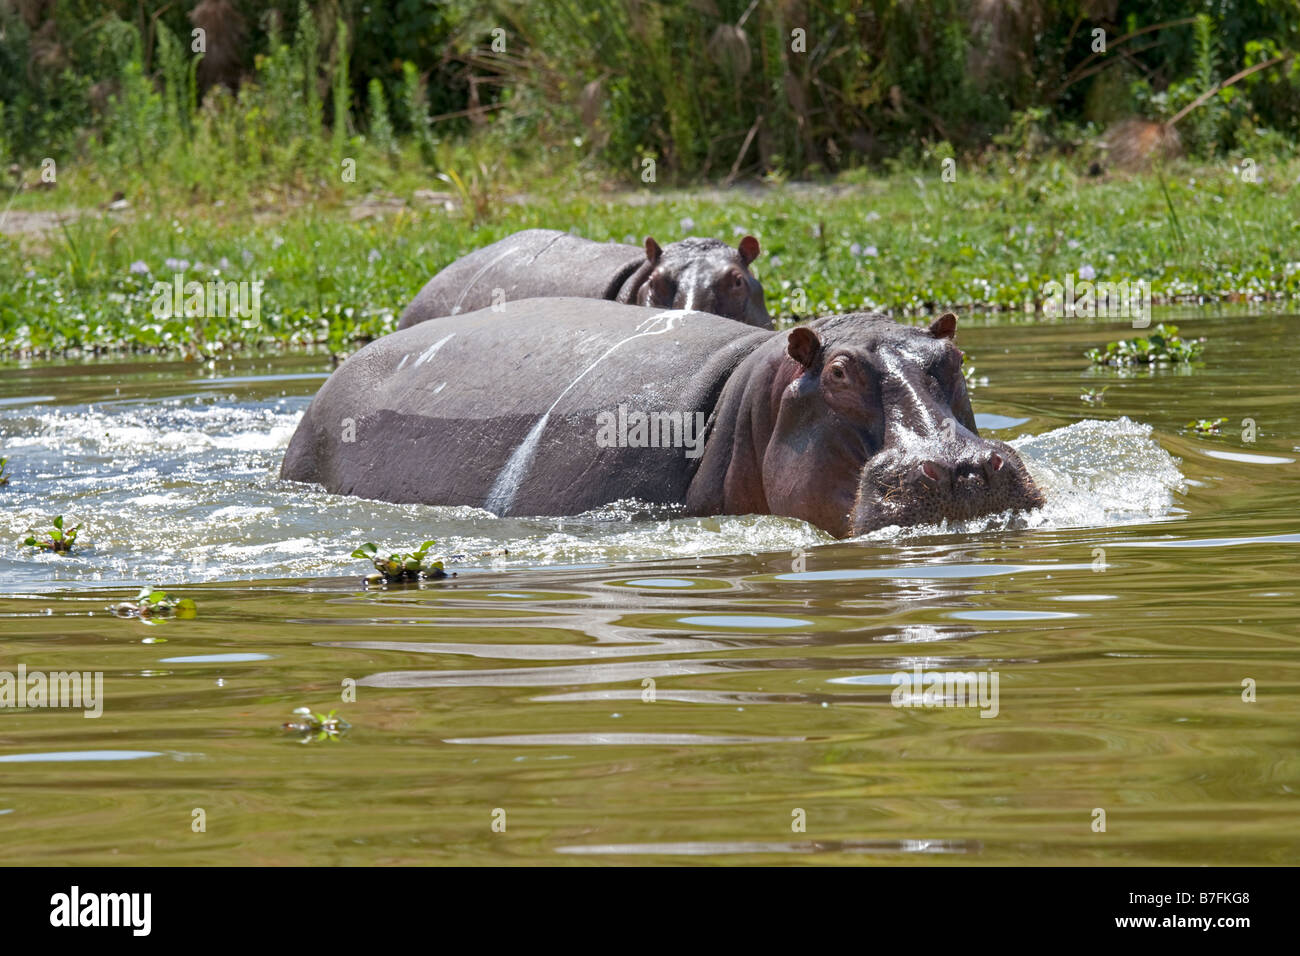 Angry Hippopotamus amphibius Lake Naivasha Kenya Stock Photo